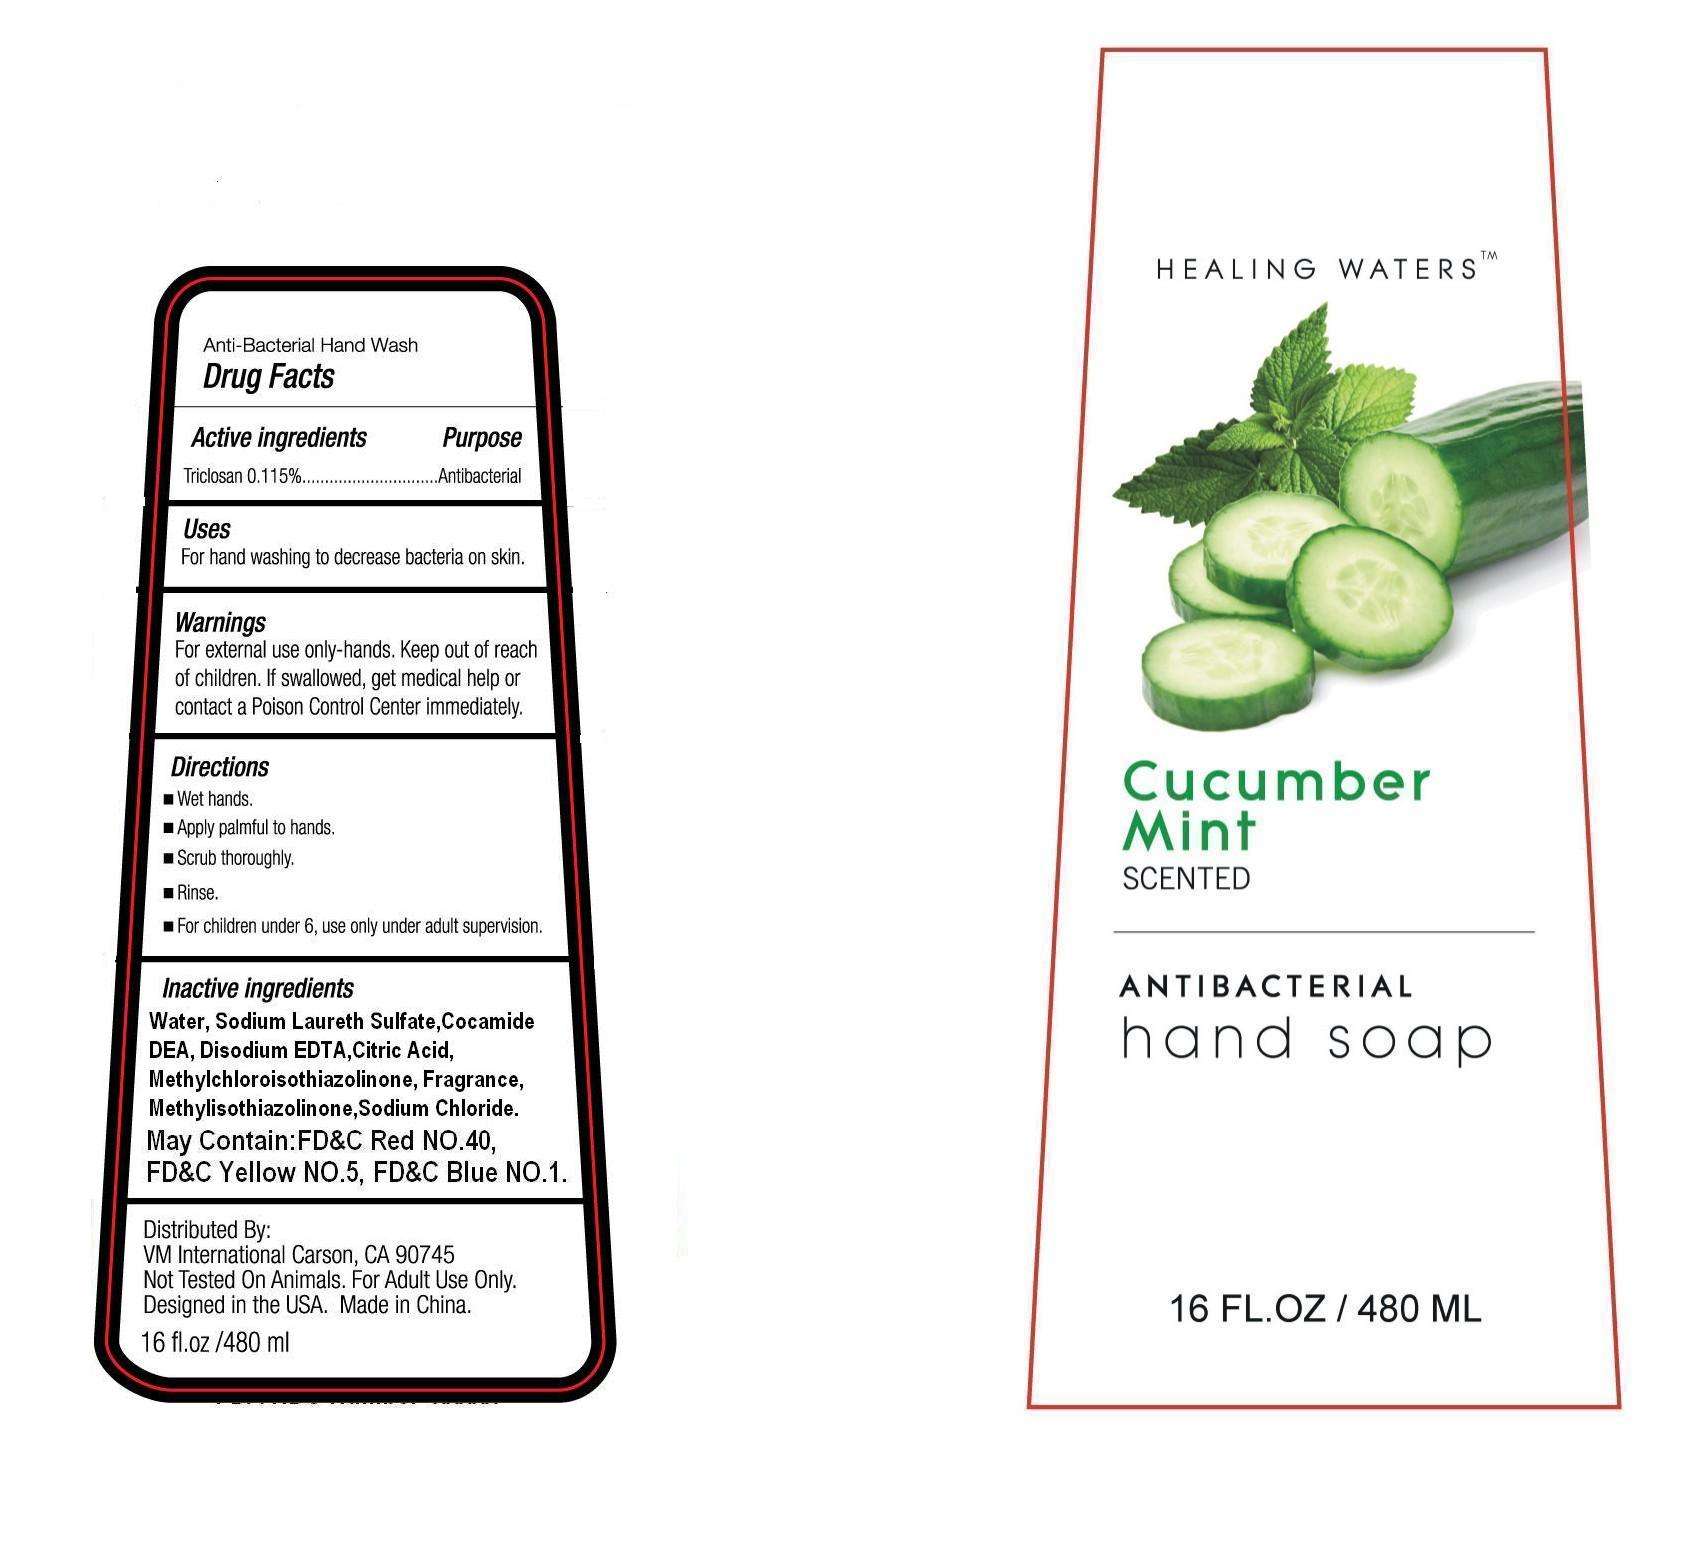 Healing Waters Cucumber Mint Antibacterial Hand Soap